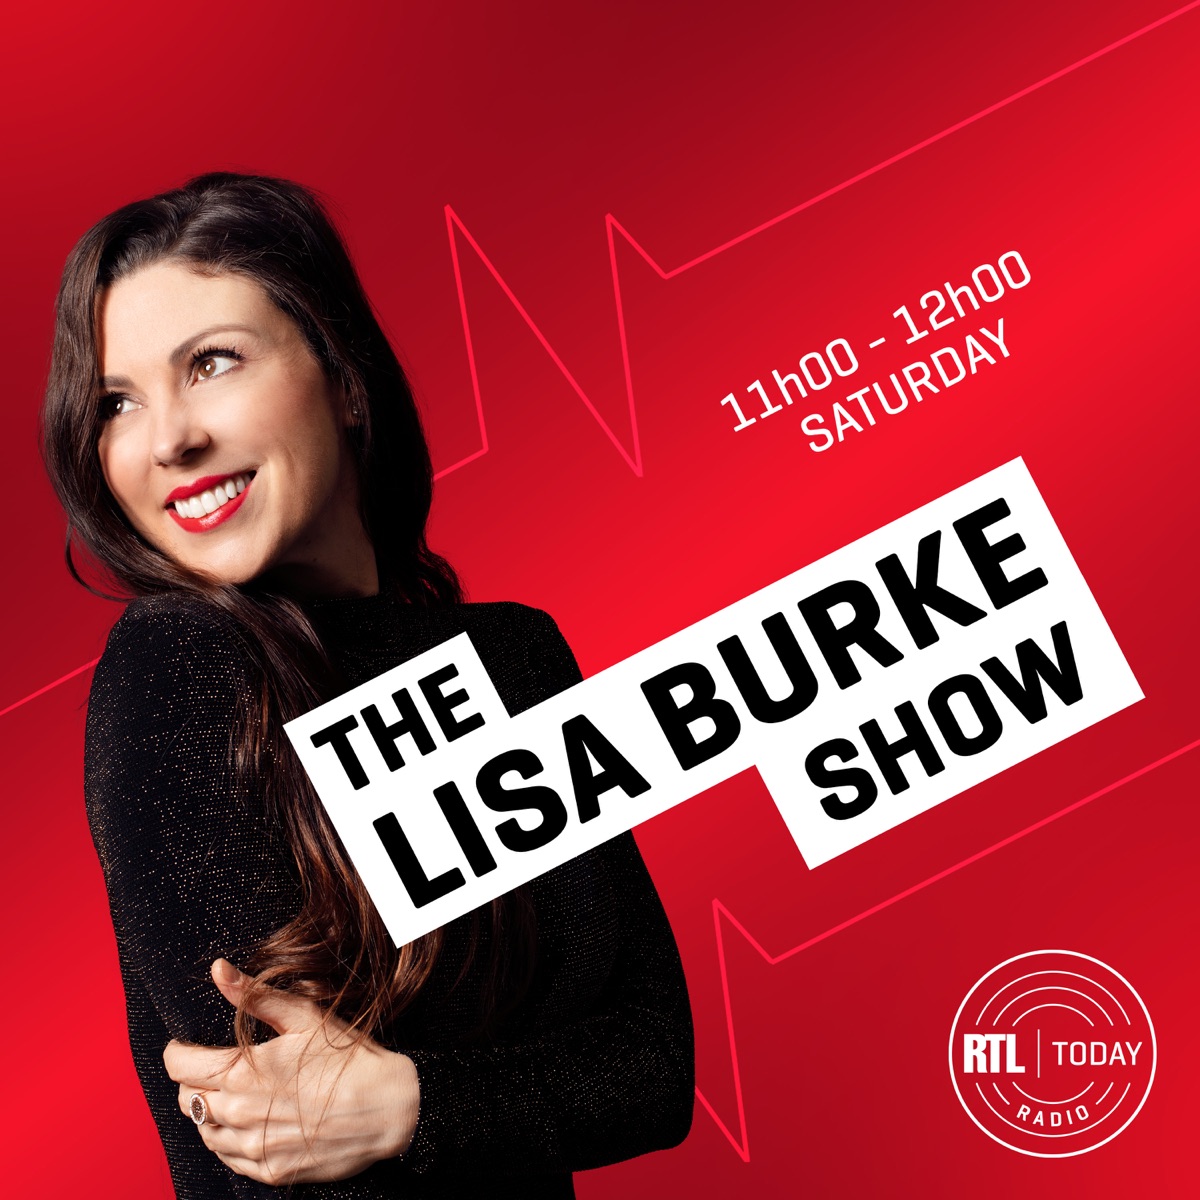 RTL Today - The Lisa Burke Show â€“ Podcast â€“ Podtail